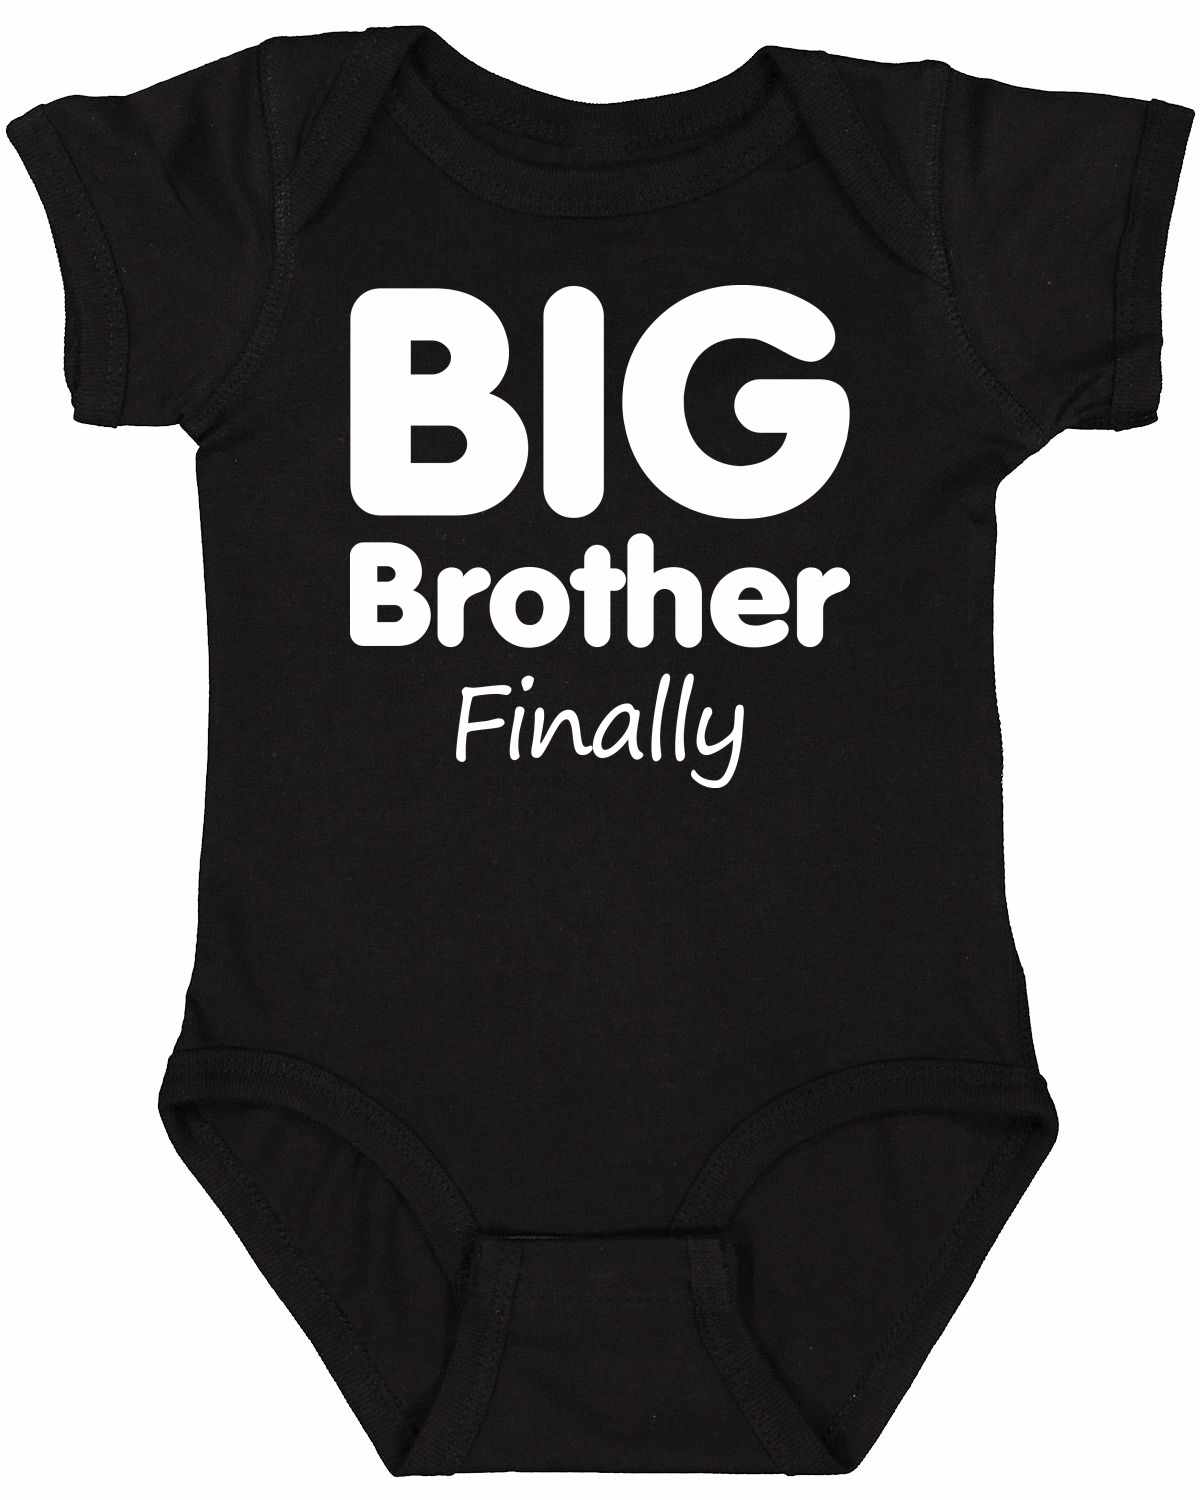 Big Brother Finally on Infant BodySuit (#962-10)